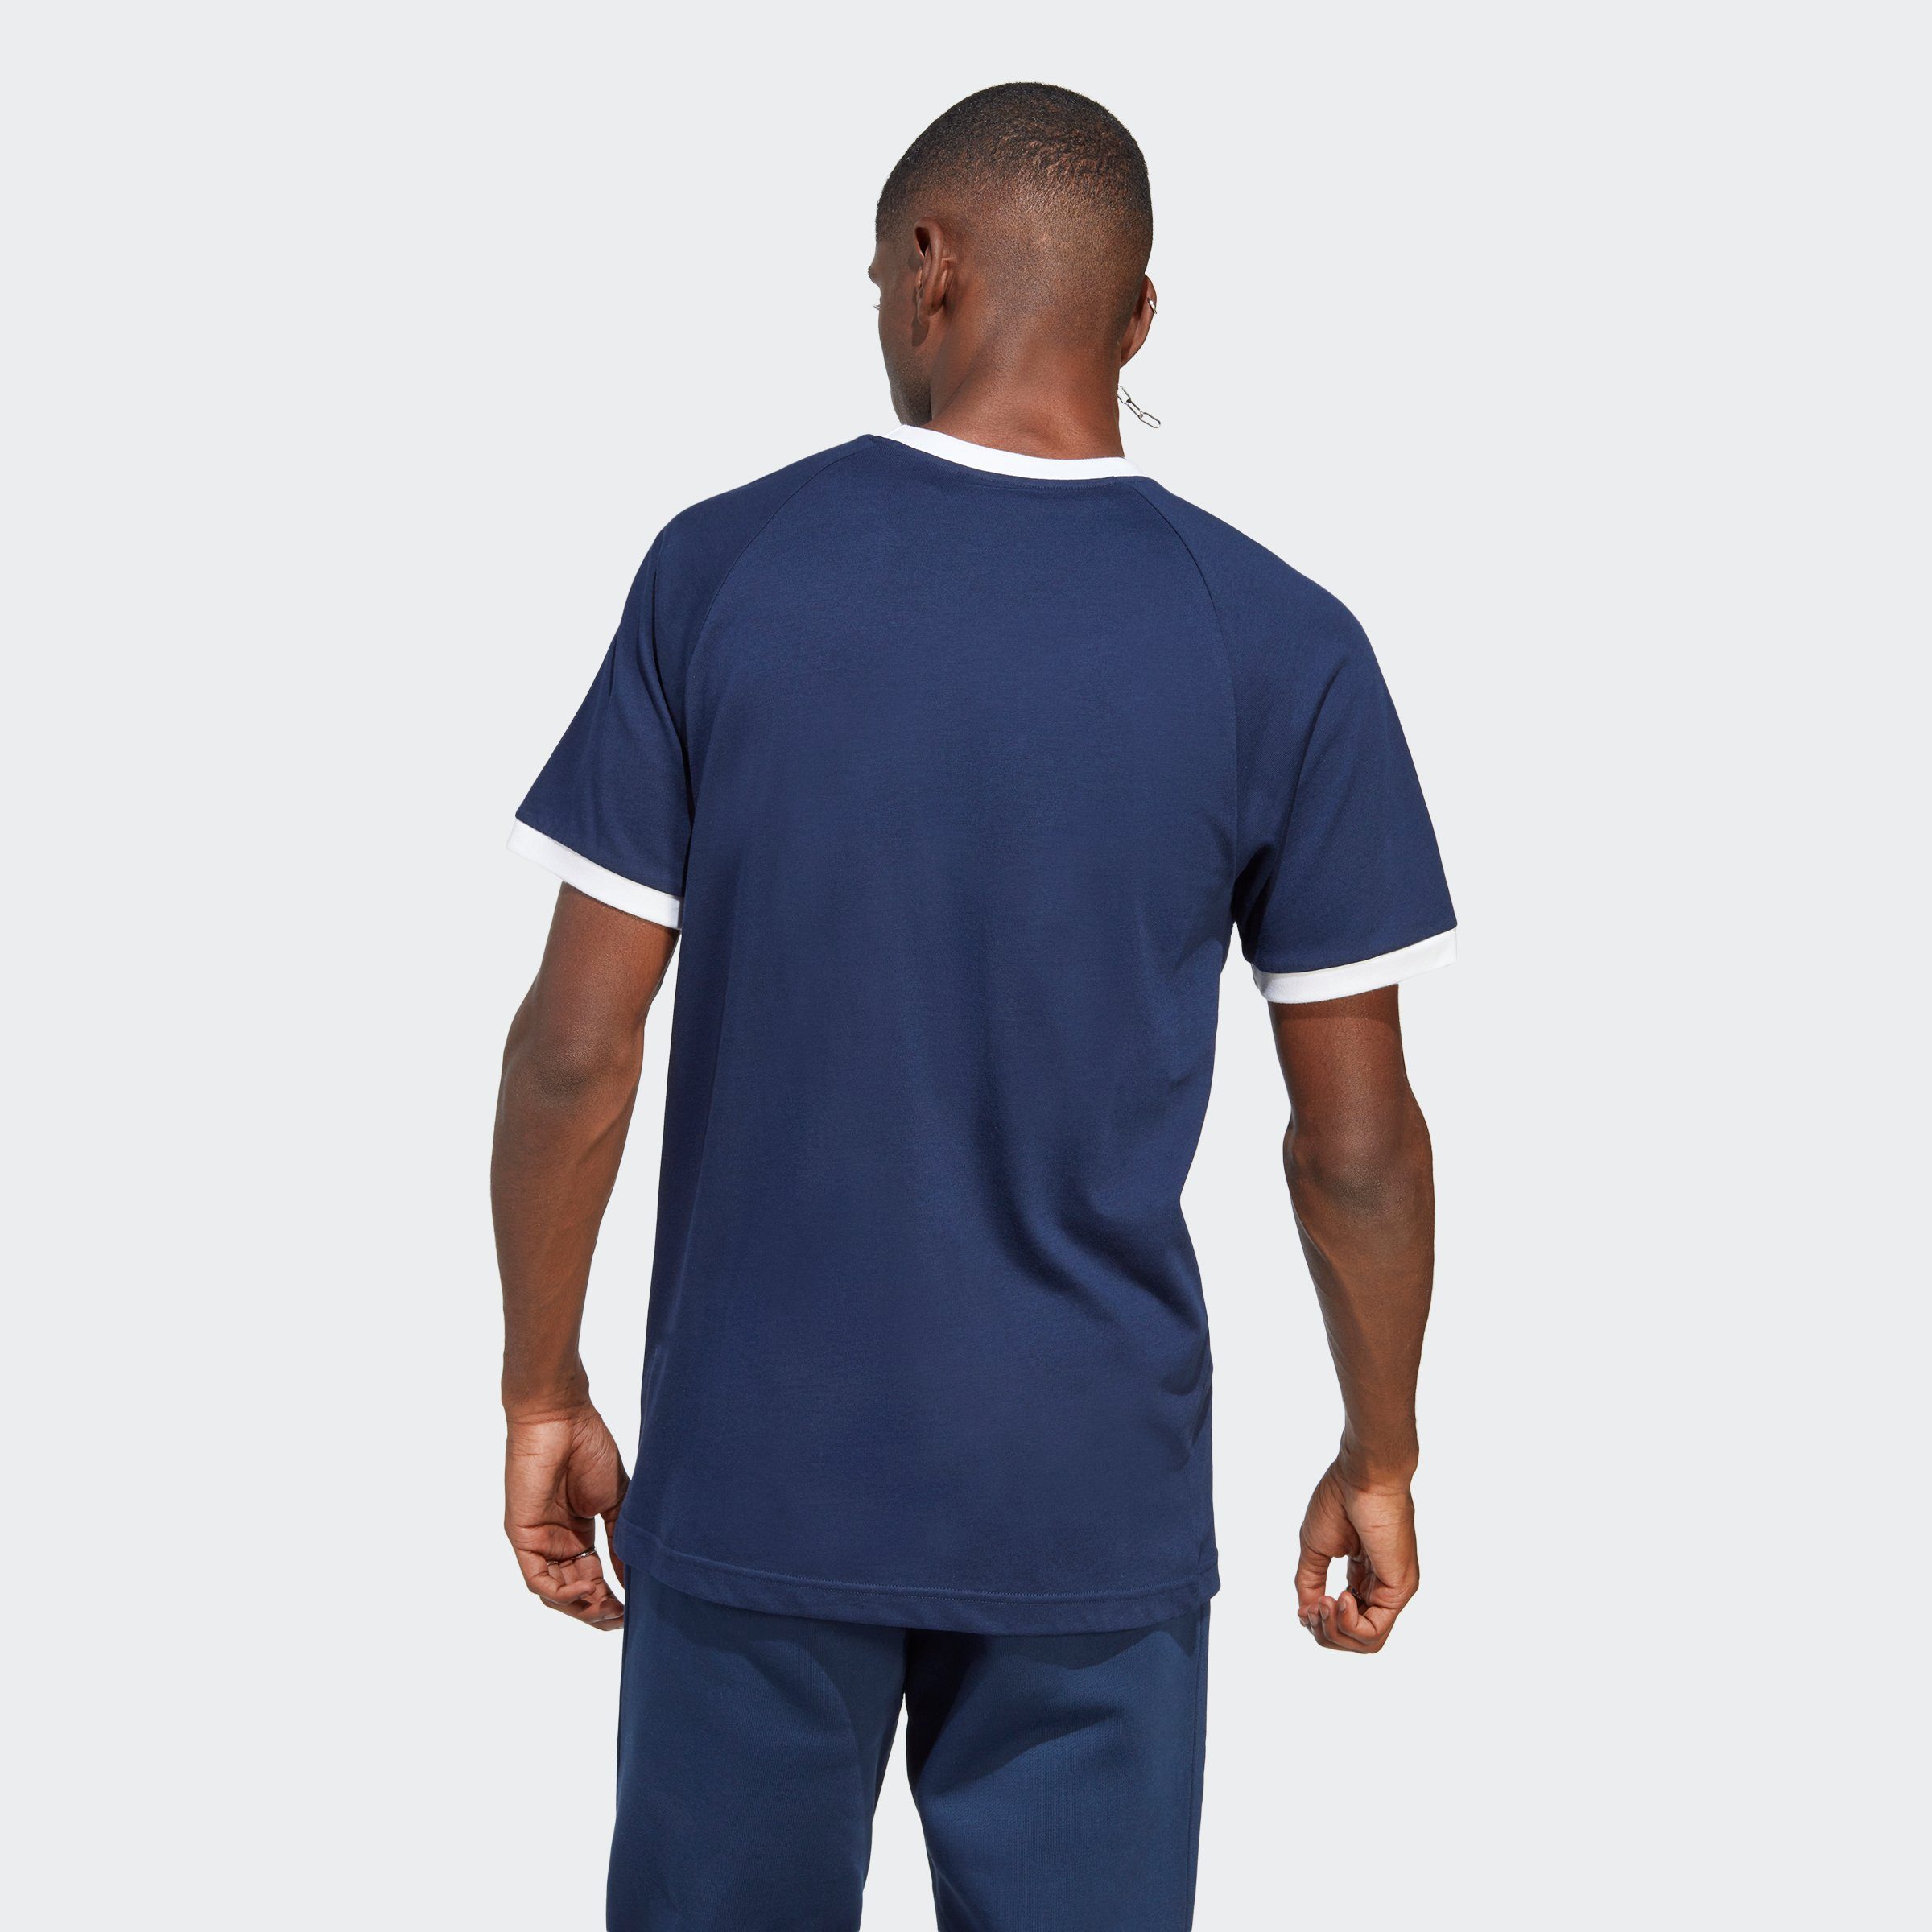 TEE adidas T-Shirt Indigo 3-STRIPES Originals Night